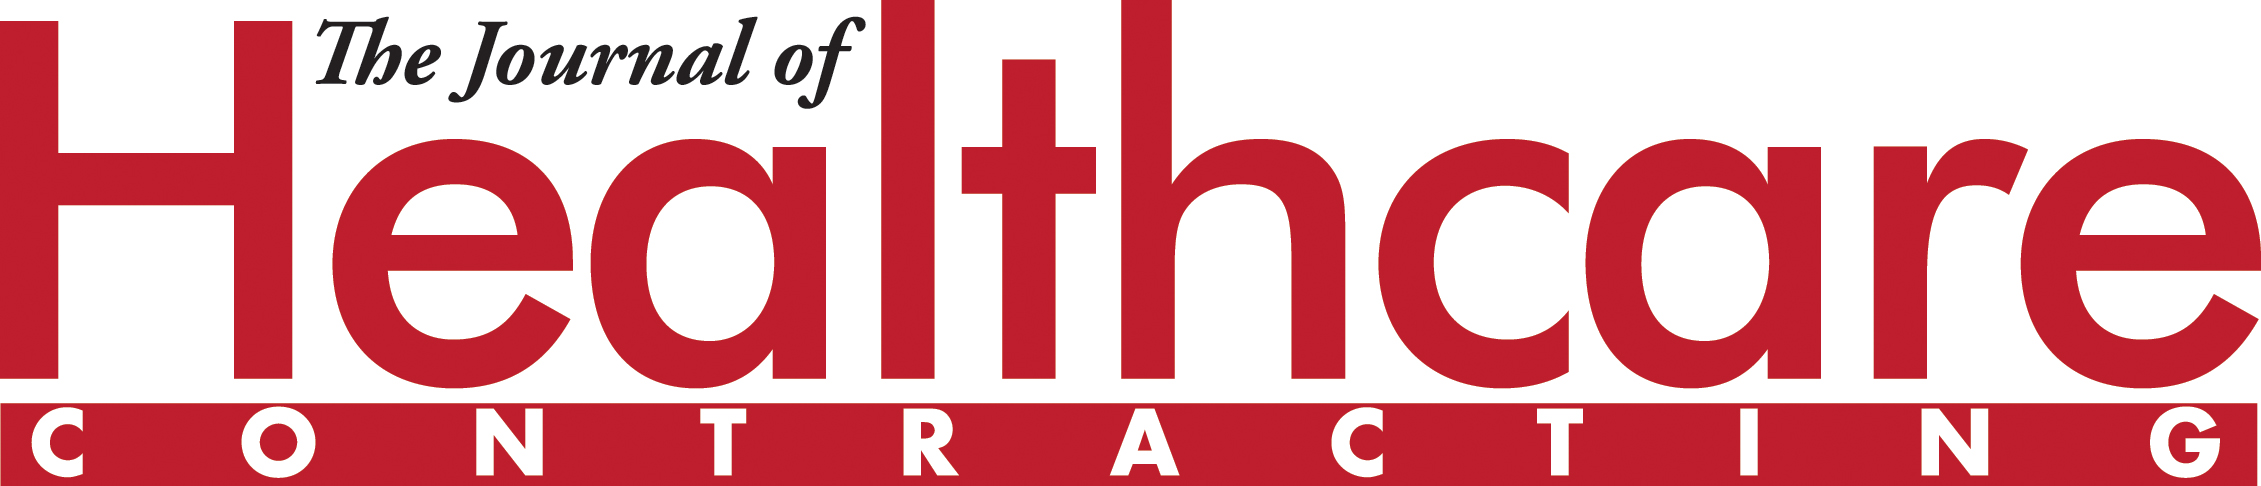 JHC Logo